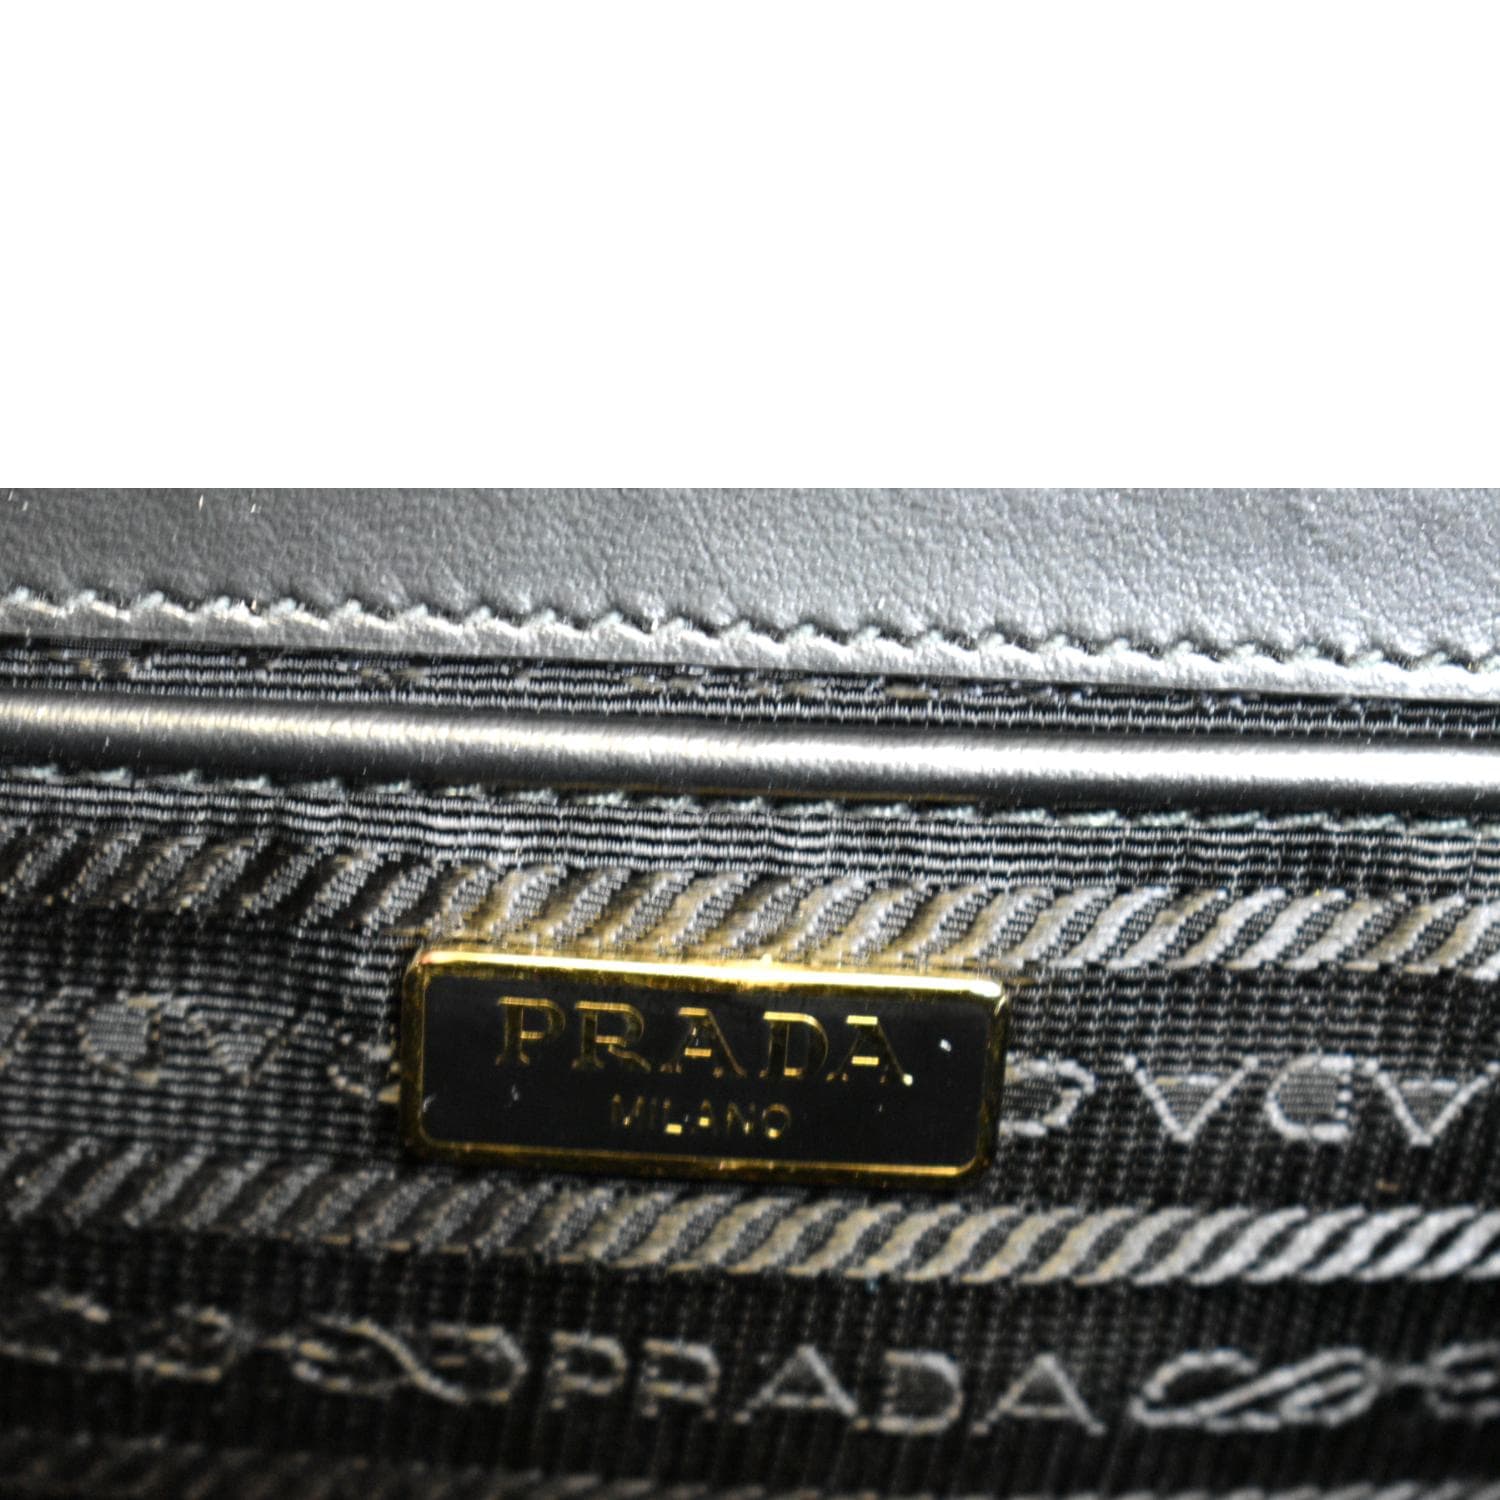 Prada Saffiano Lux Leather Crossbody Bag in Black